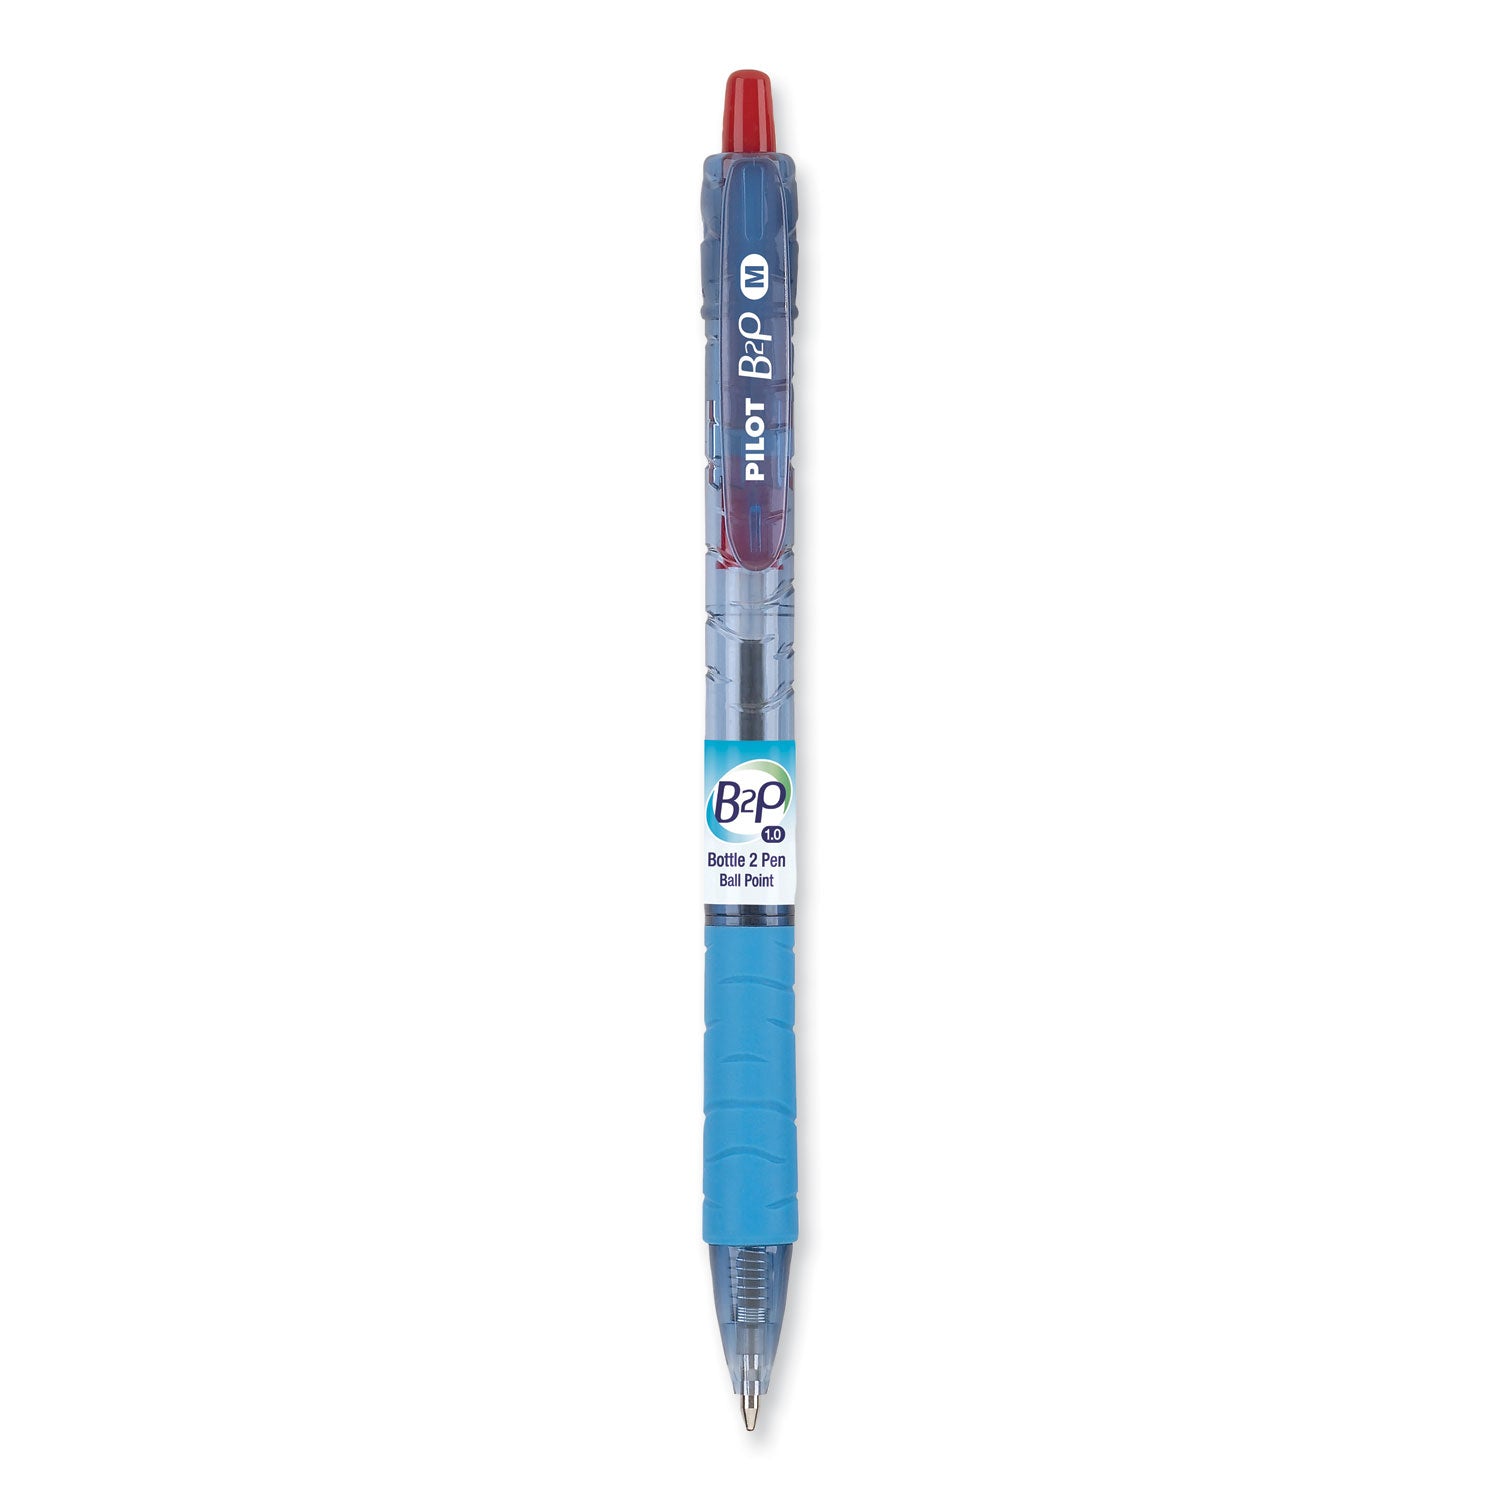 B2P Bottle-2-Pen Recycled Ballpoint Pen, Retractable, Medium 1 mm, Red Ink, Translucent Blue Barrel, Dozen - 